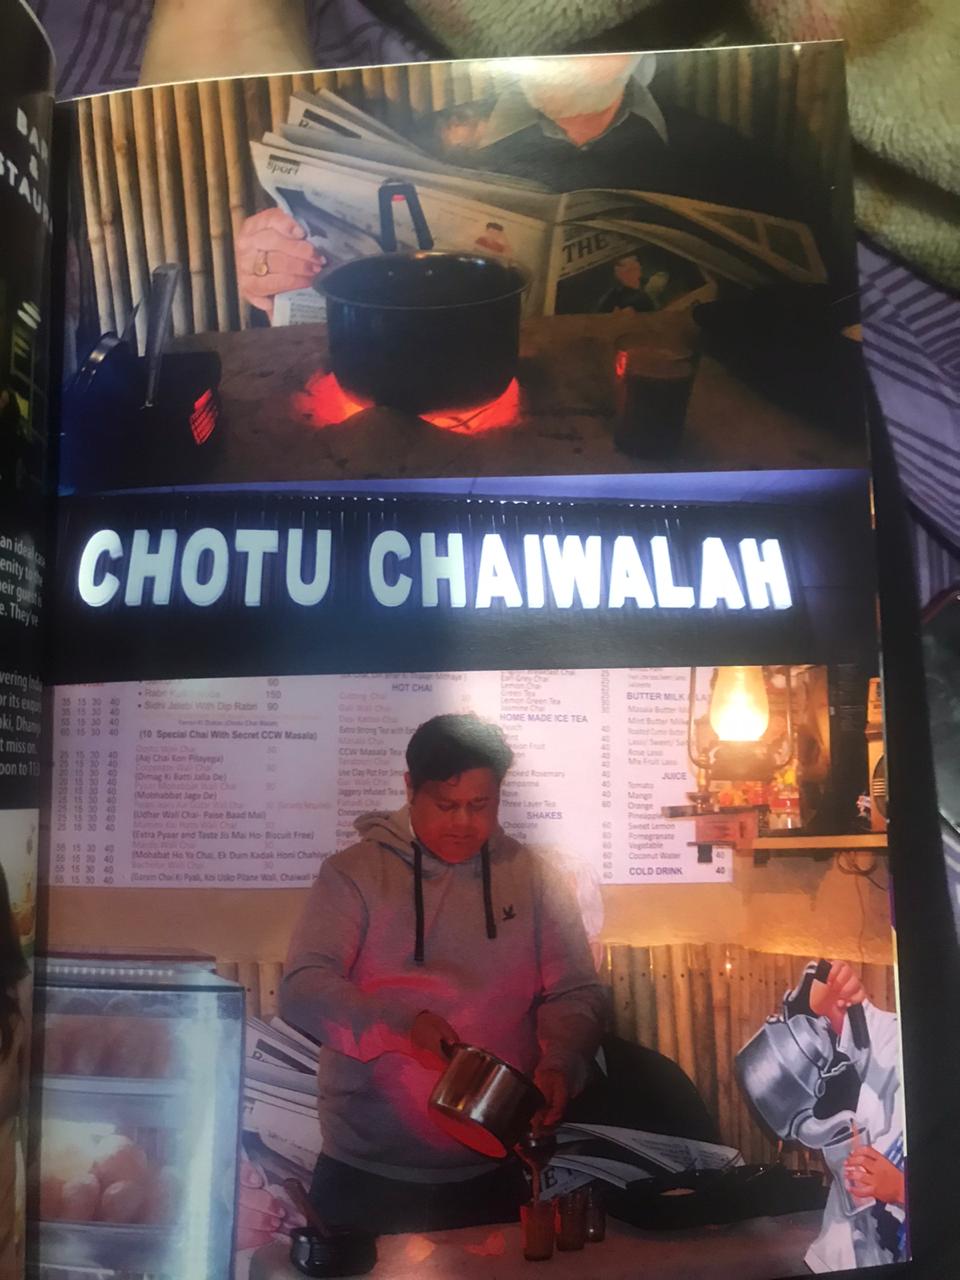 Chotu Chaiwalah in Aviation Times